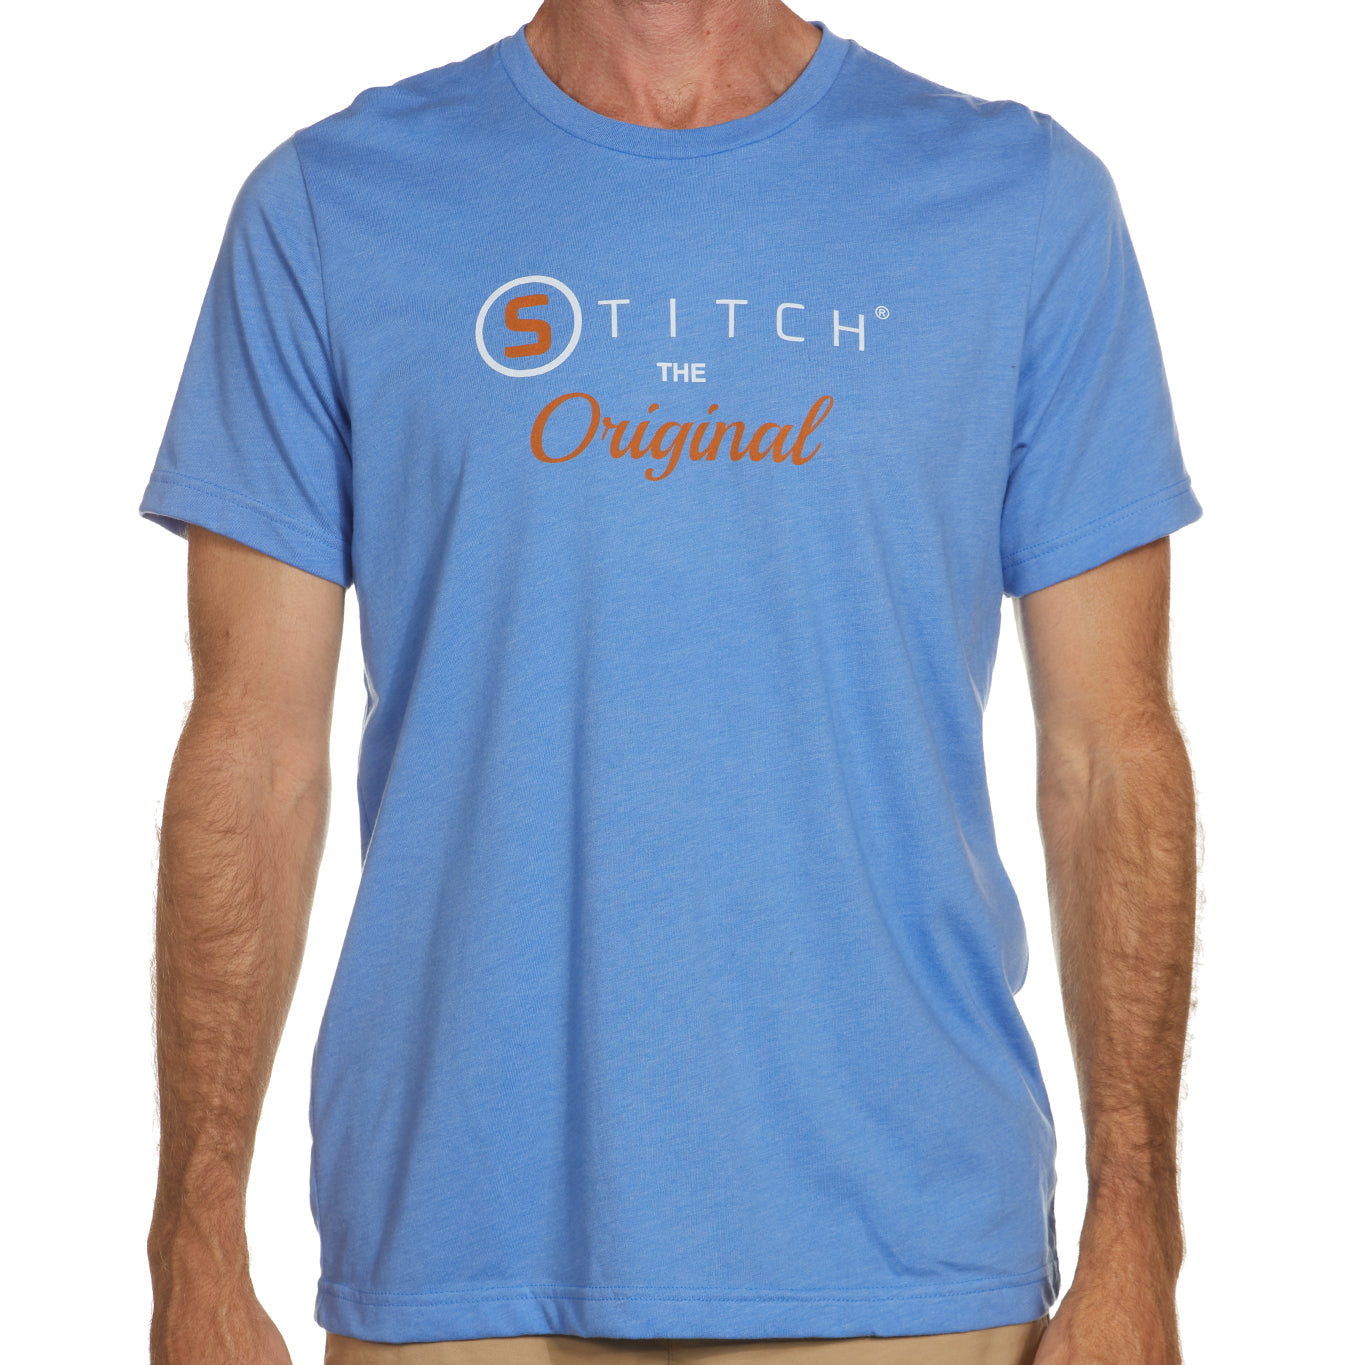 Stitch the Original T-Shirt